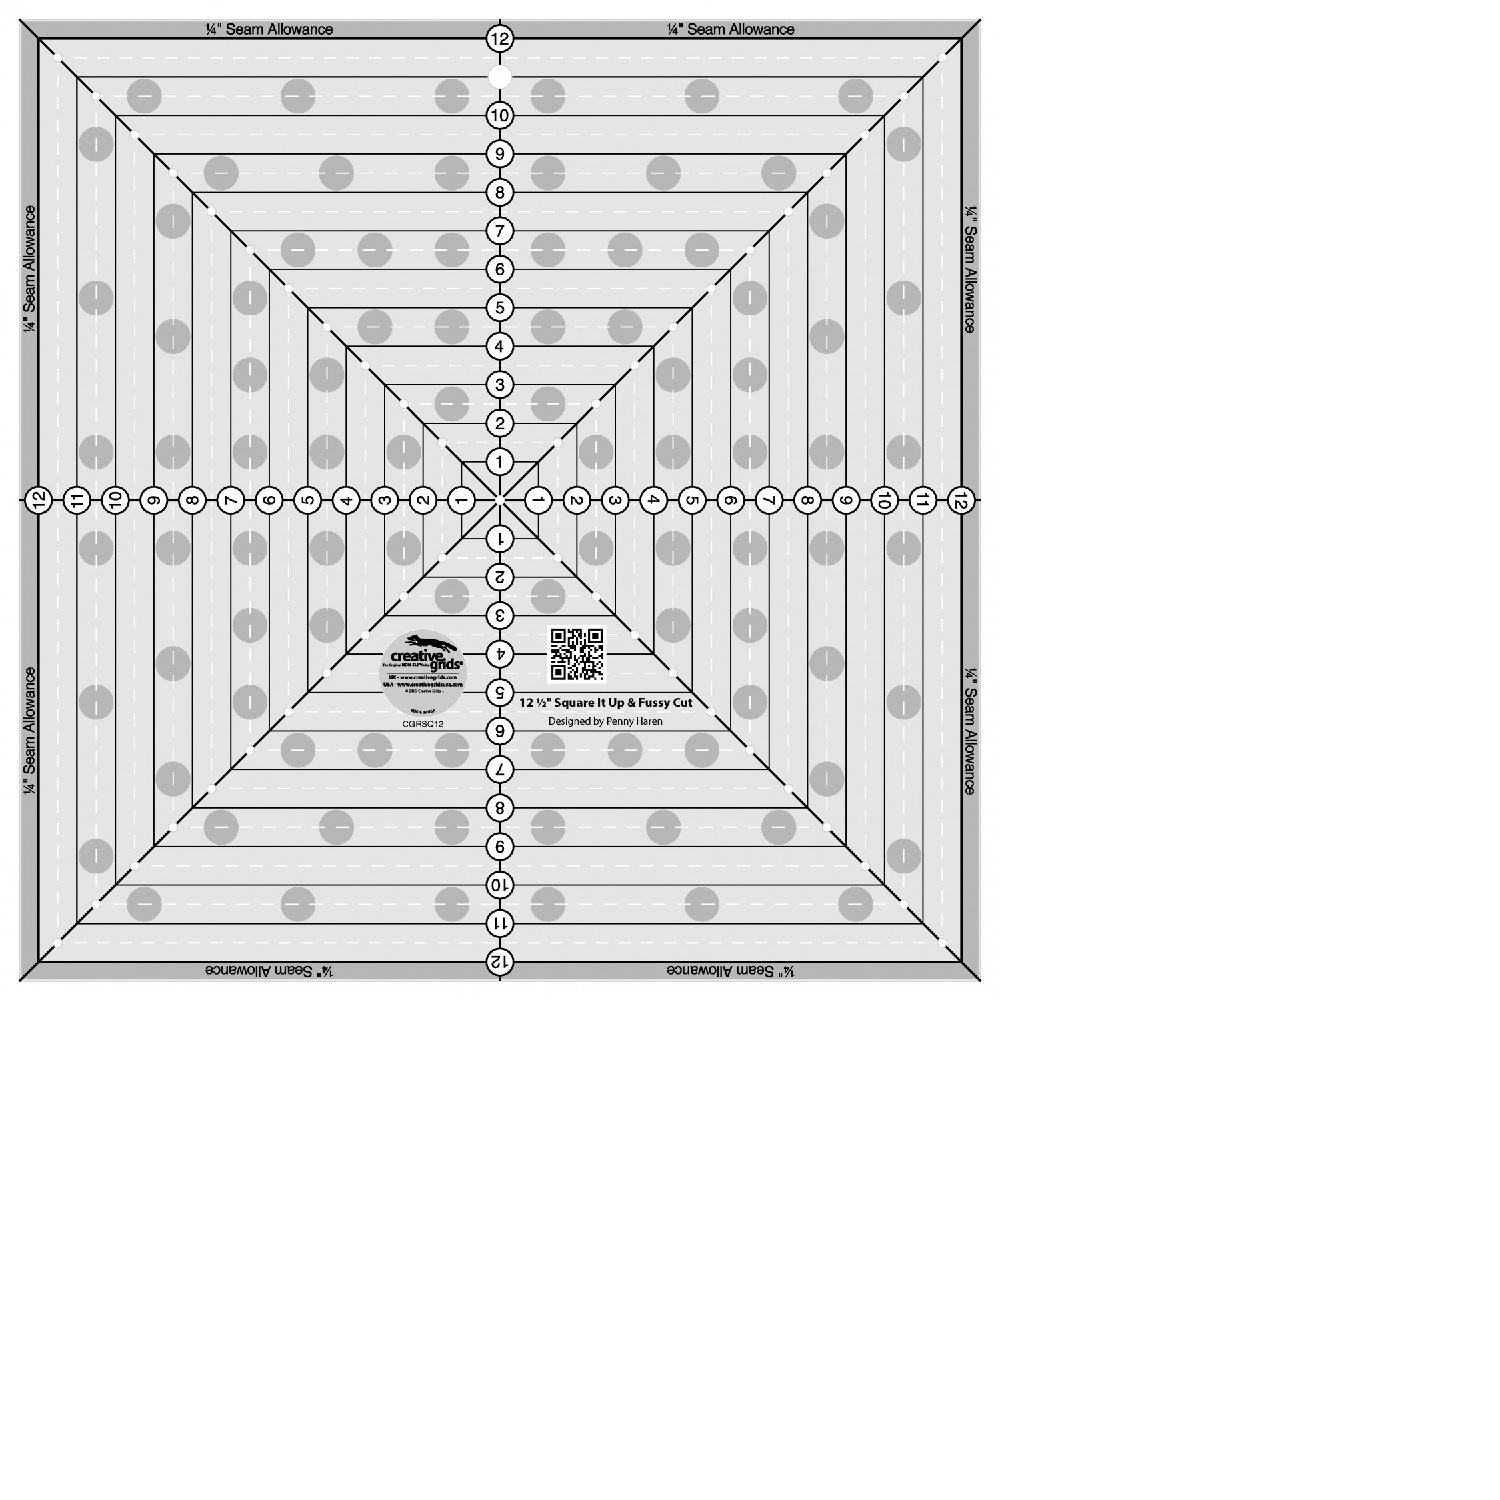 Creative Grids Half Square 4 in 1 Triangle Ruler